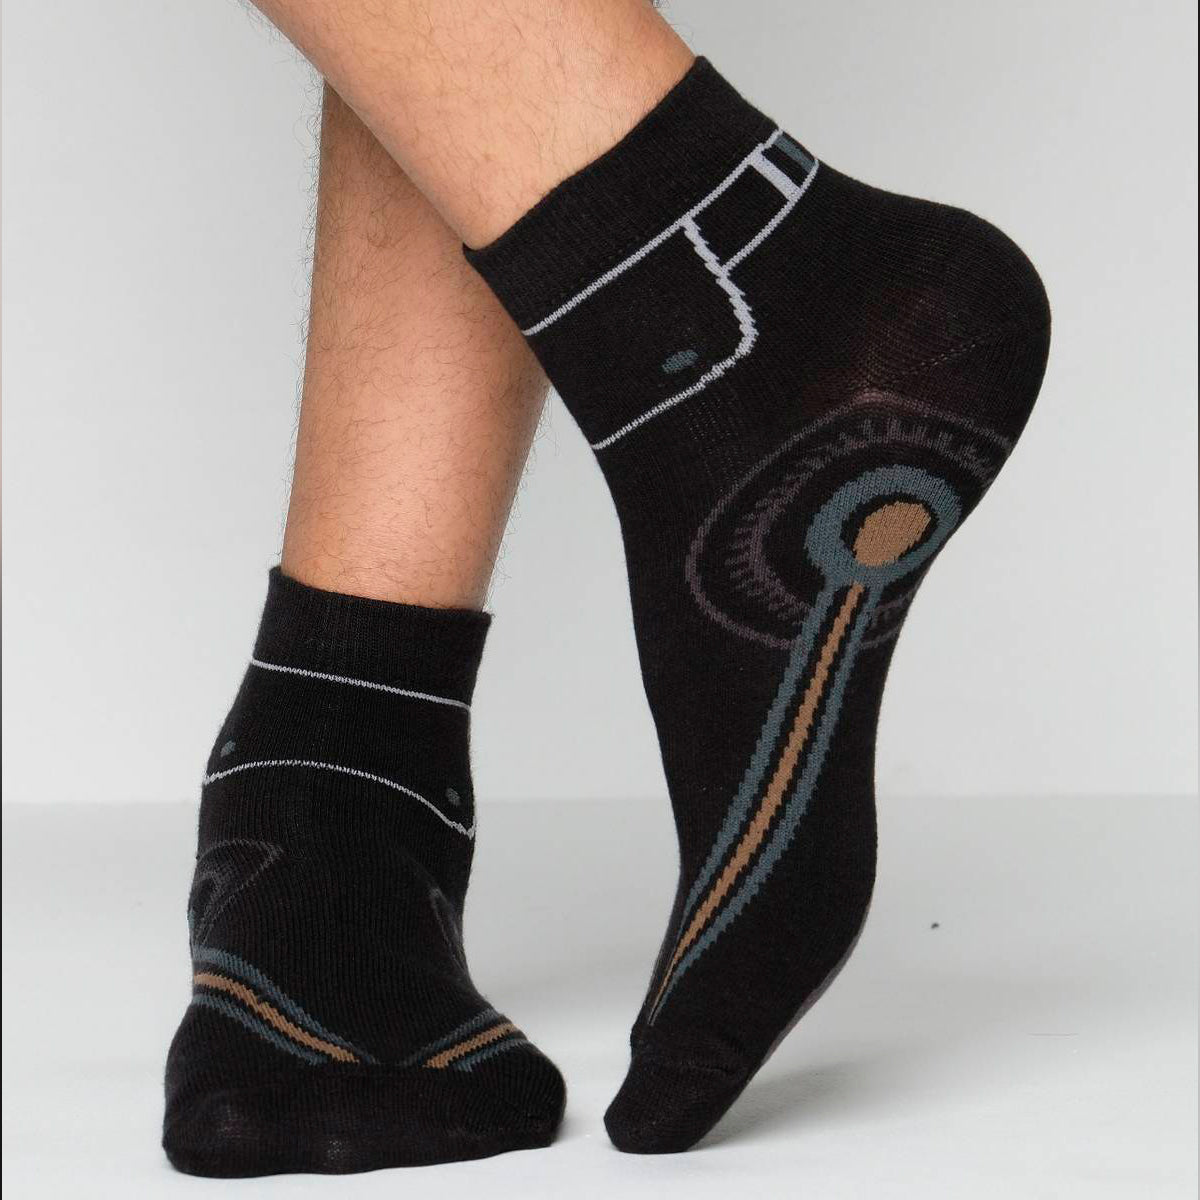 X Club Ankle Socks for Men by MB Hosiery